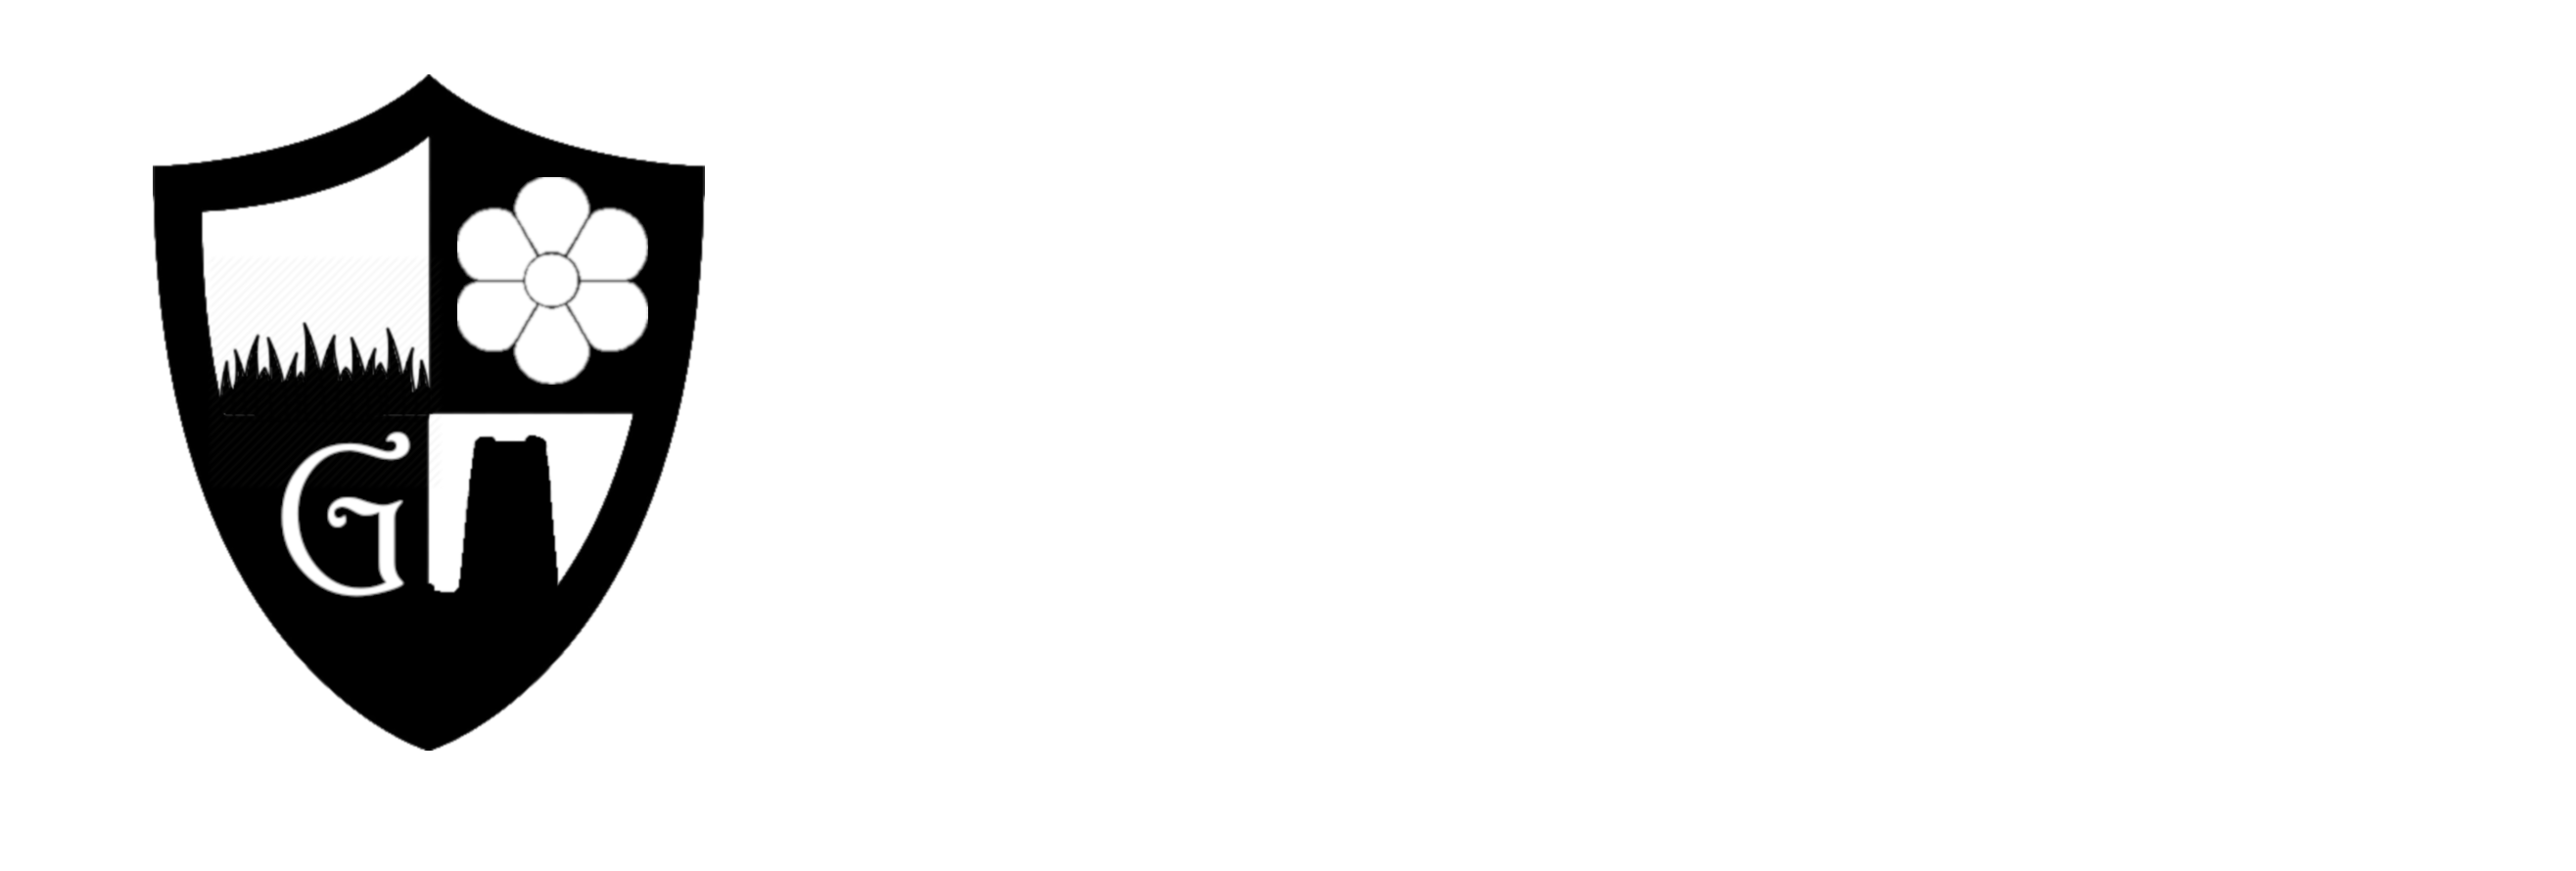 Gormsey Parish Council Logo